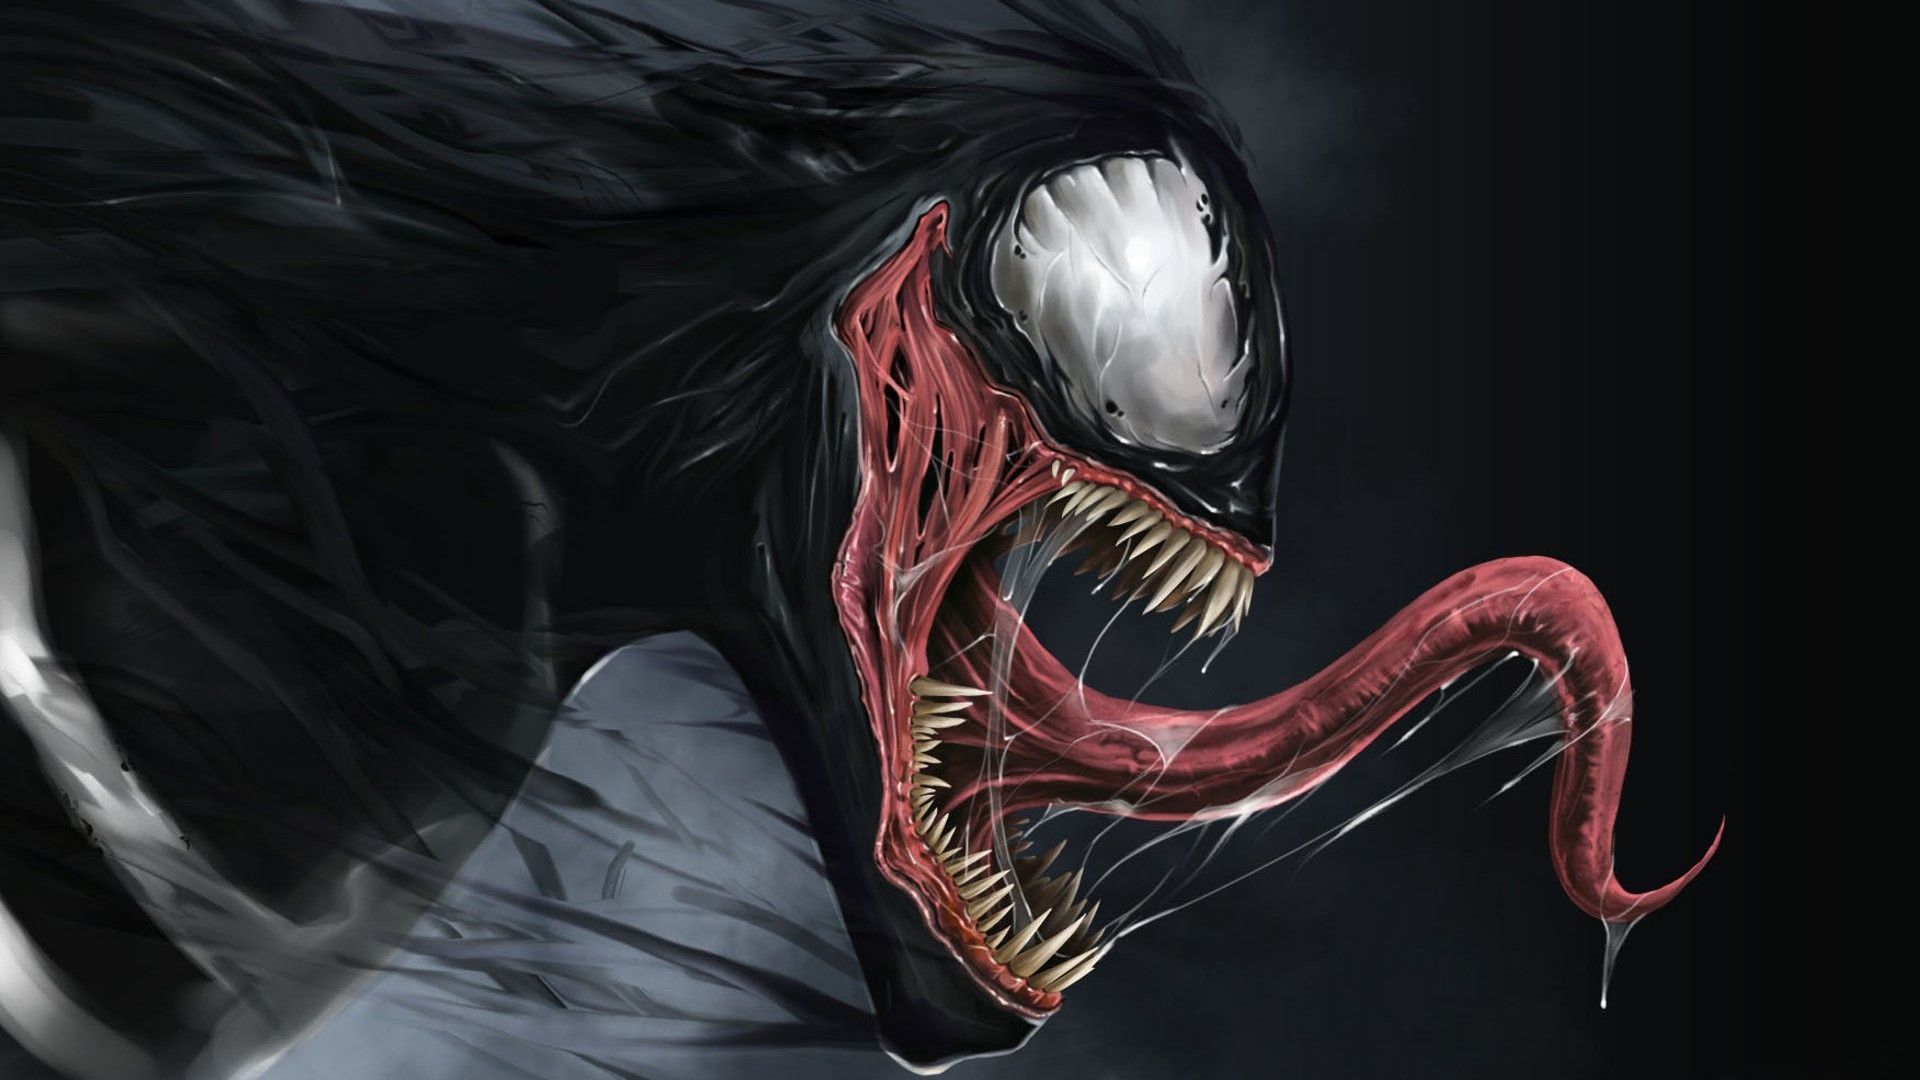 Download Wallpaper 1920x1080 Venom, Marvel comics, Spider man Full